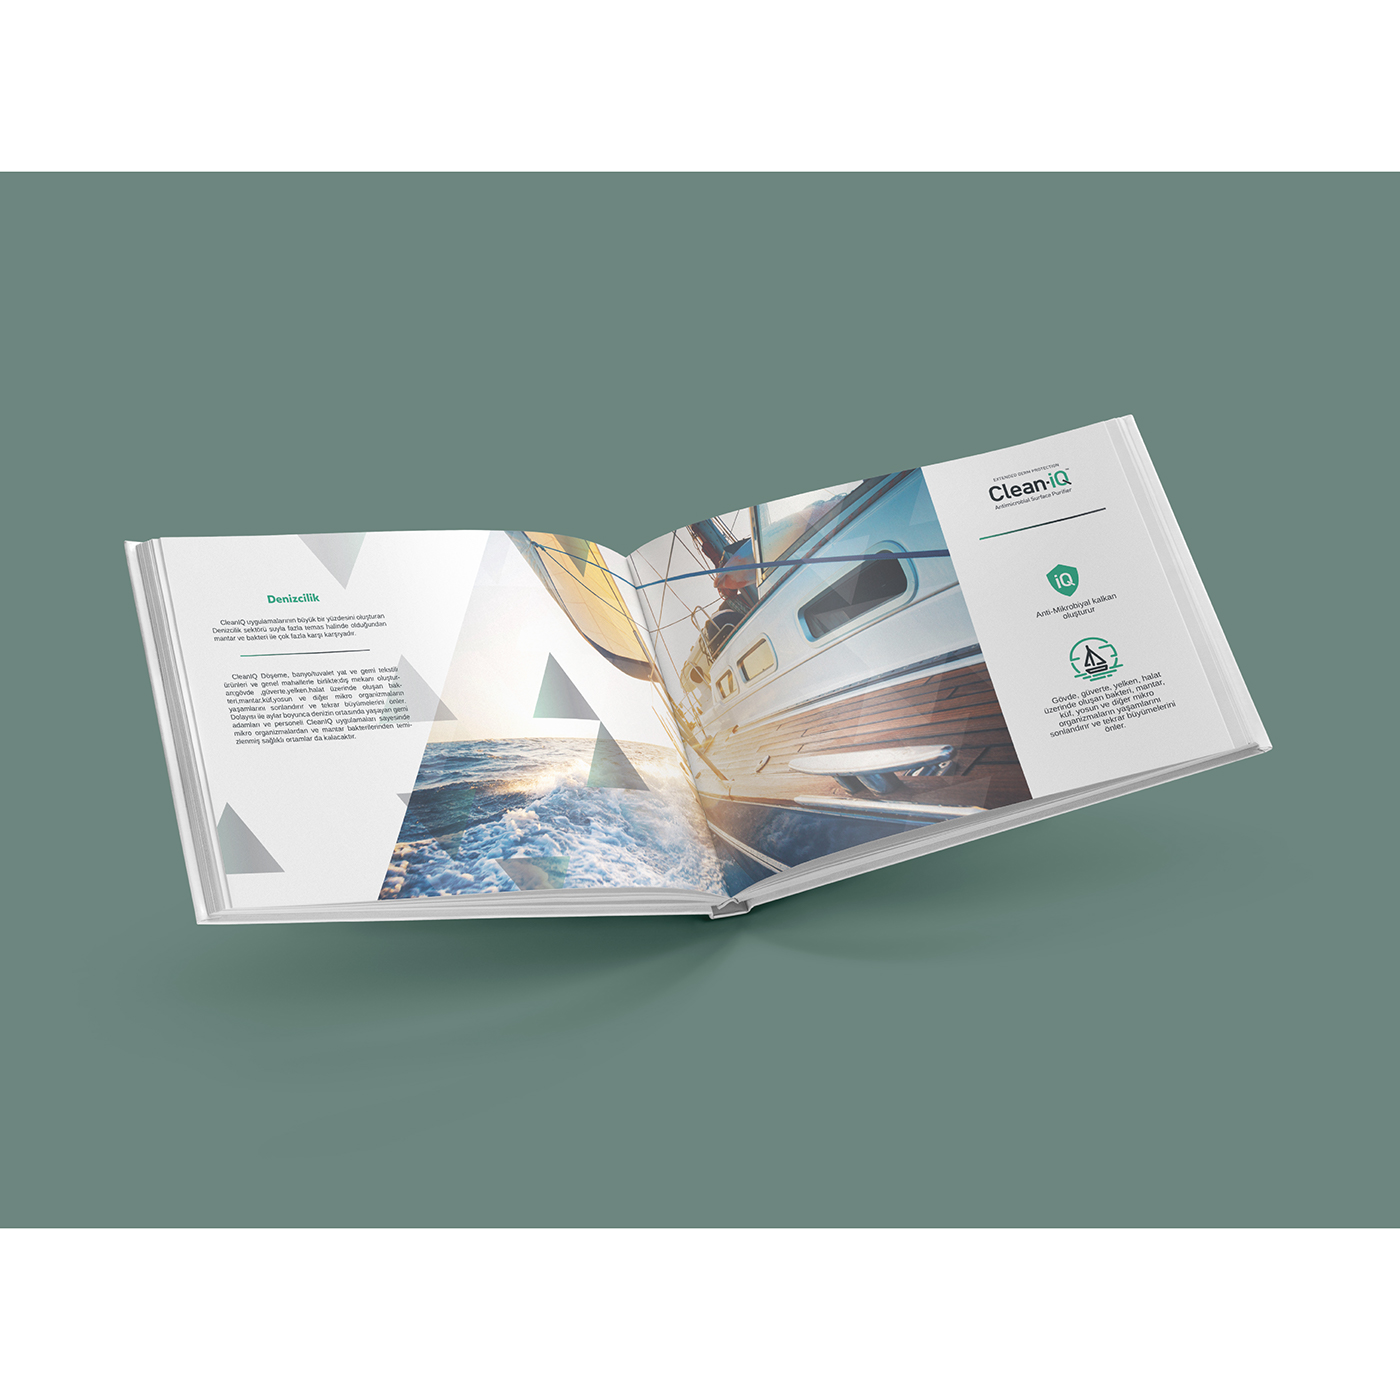 strategic visual id corporate id cleaniq company visual business card brochure cleaning company strategic design Design Management brand management